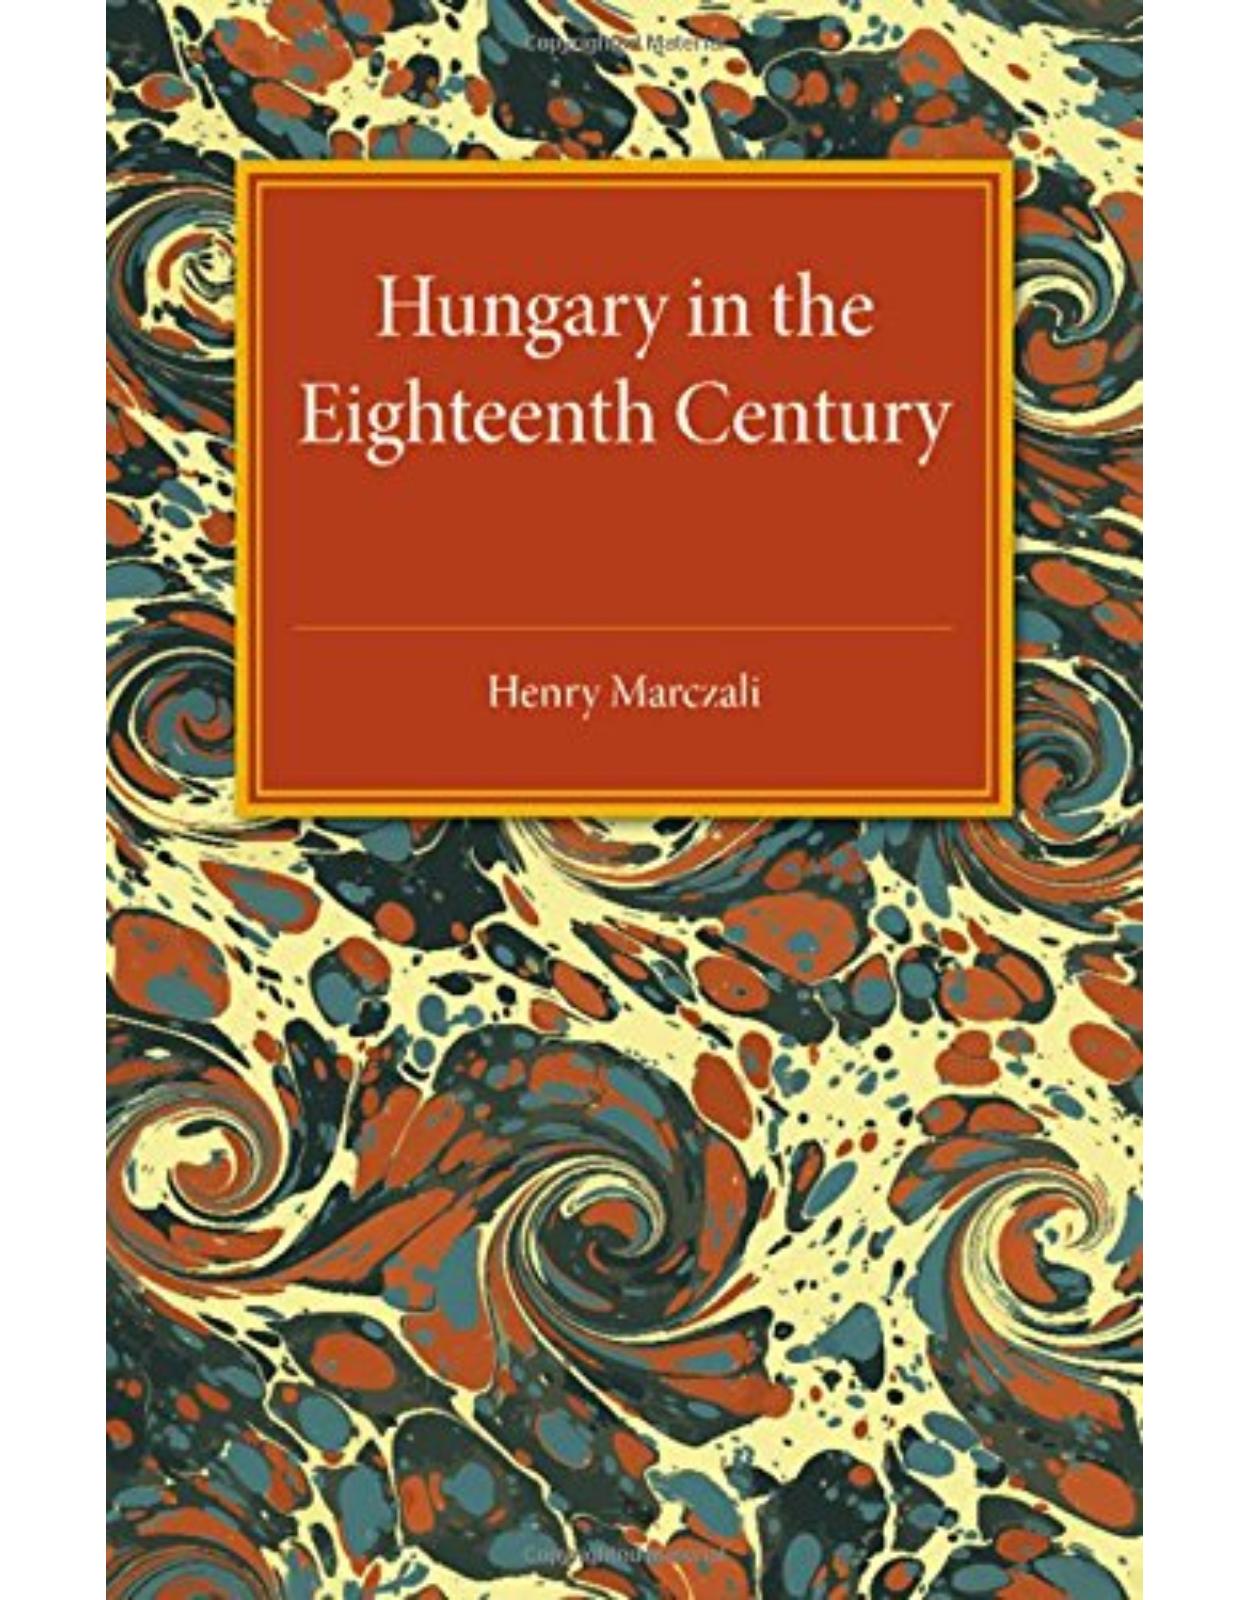 Hungary in the Eighteenth Century